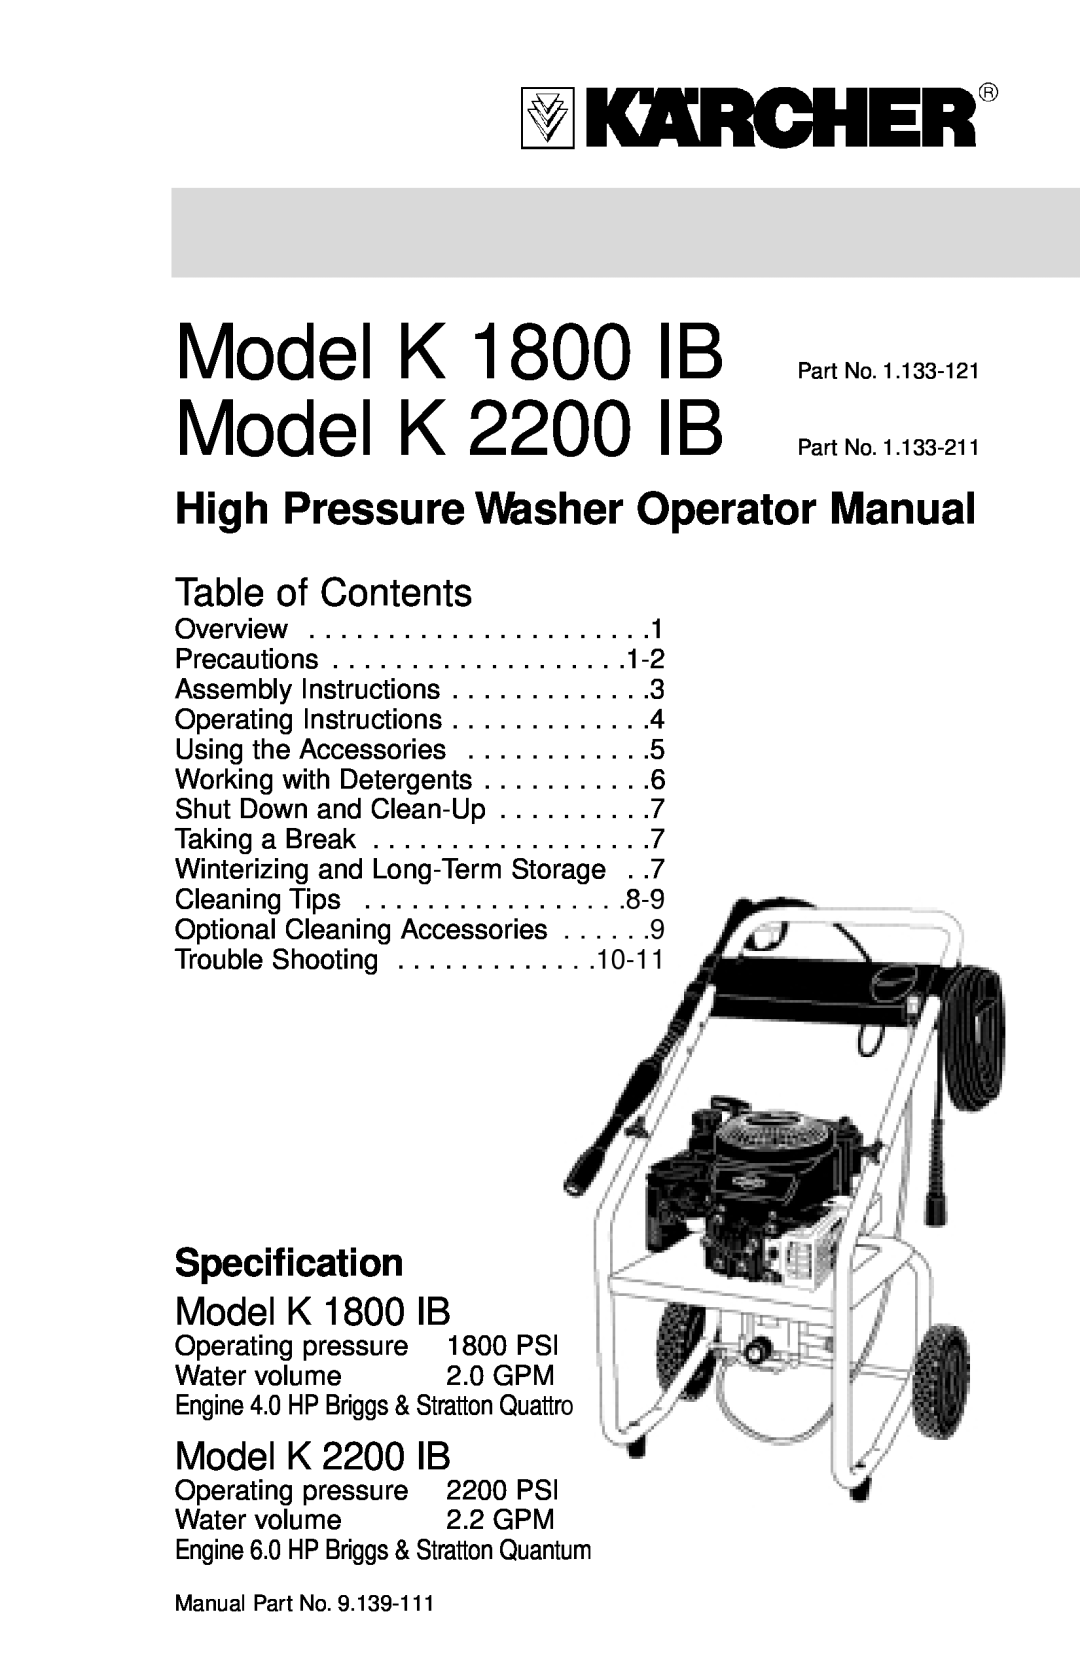 Karcher manual Table of Contents, Model K 1800 IB Model K 2200 IB, High Pressure Washer Operator Manual 